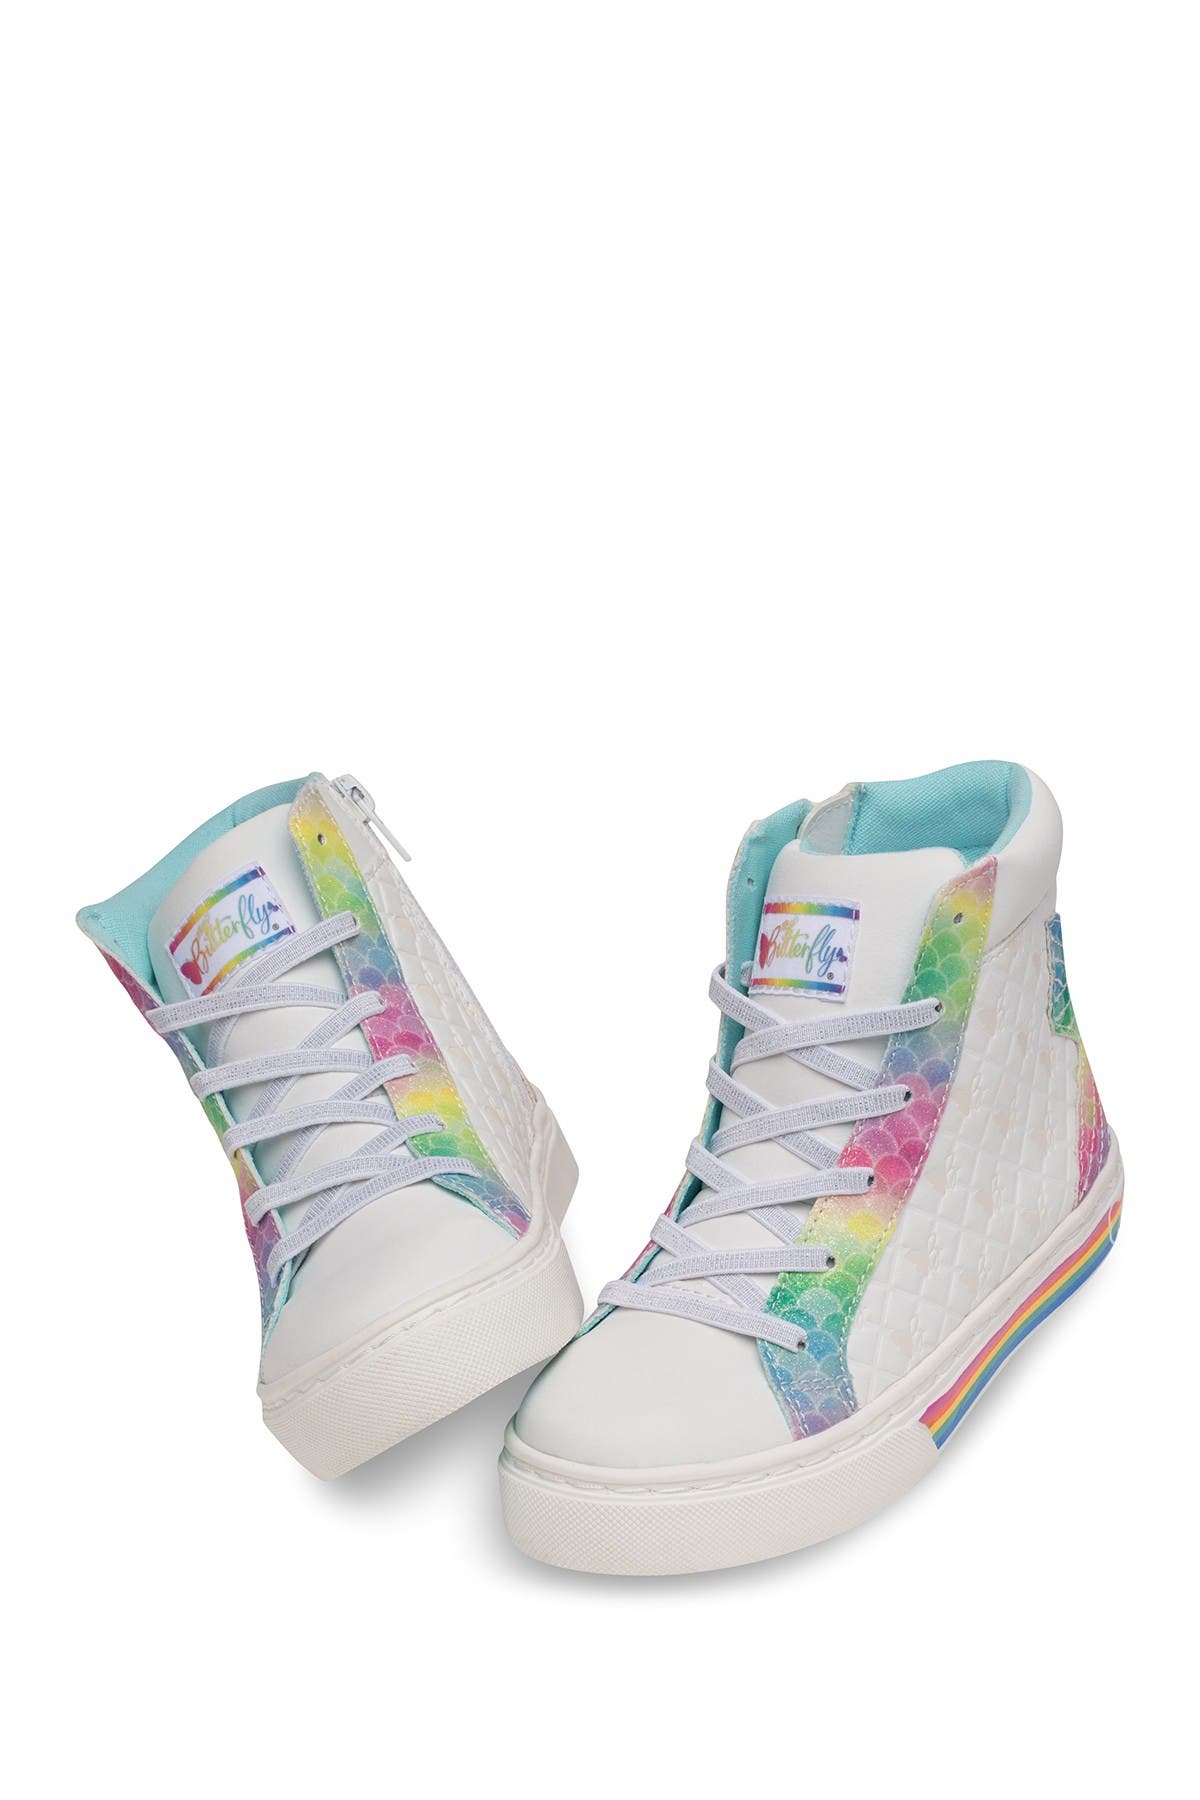 My Butterfly Kids' Flytop High Top Sneaker In White/rainbow